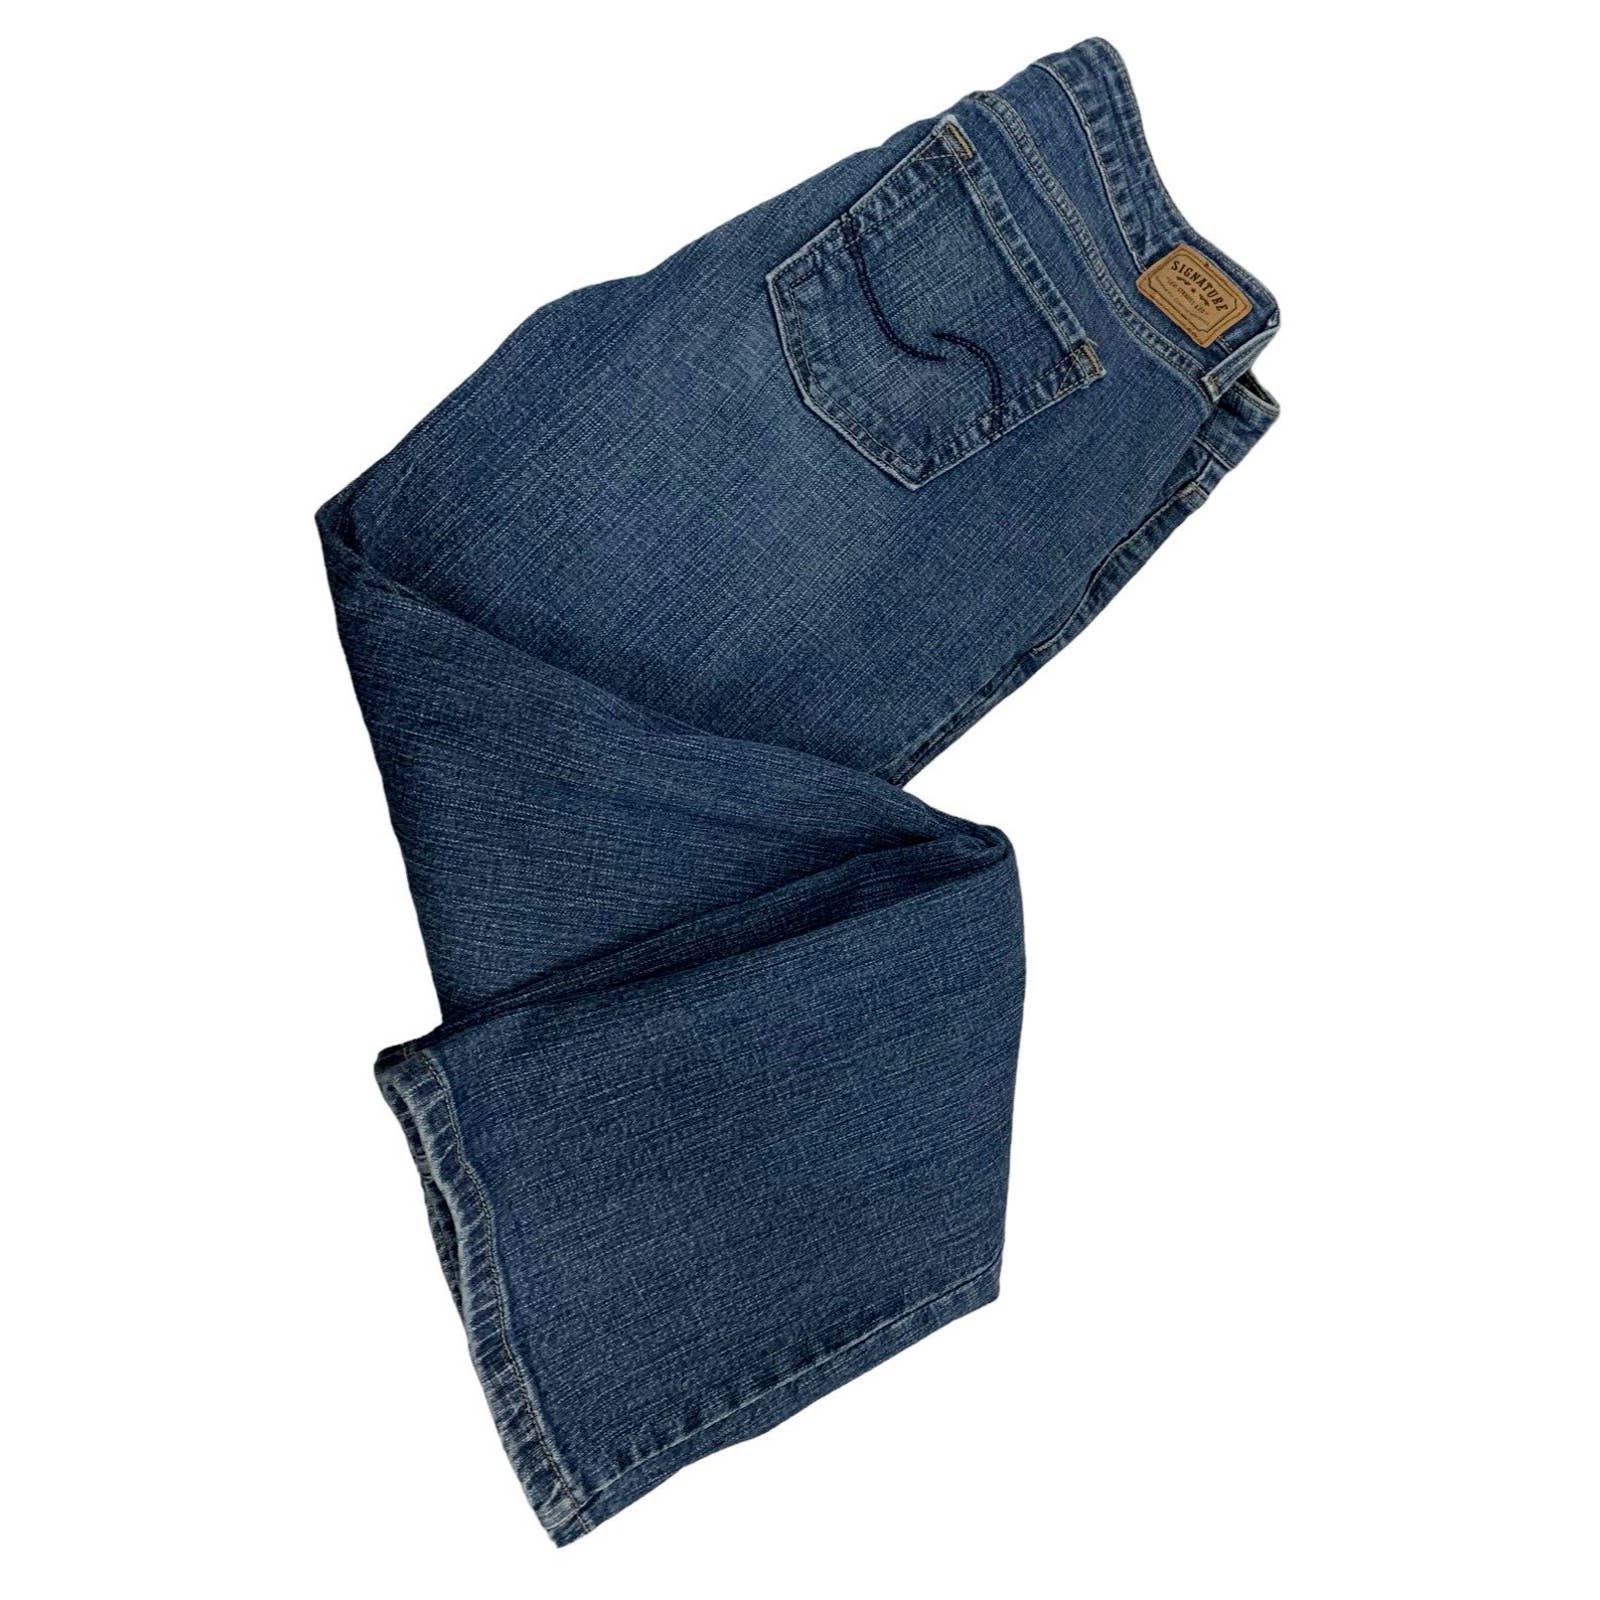 large selection Levi Strauss Signature Jeans Womens 10 Bootcut Low Rise Medium Wash Denim pkObXBi3R New Style